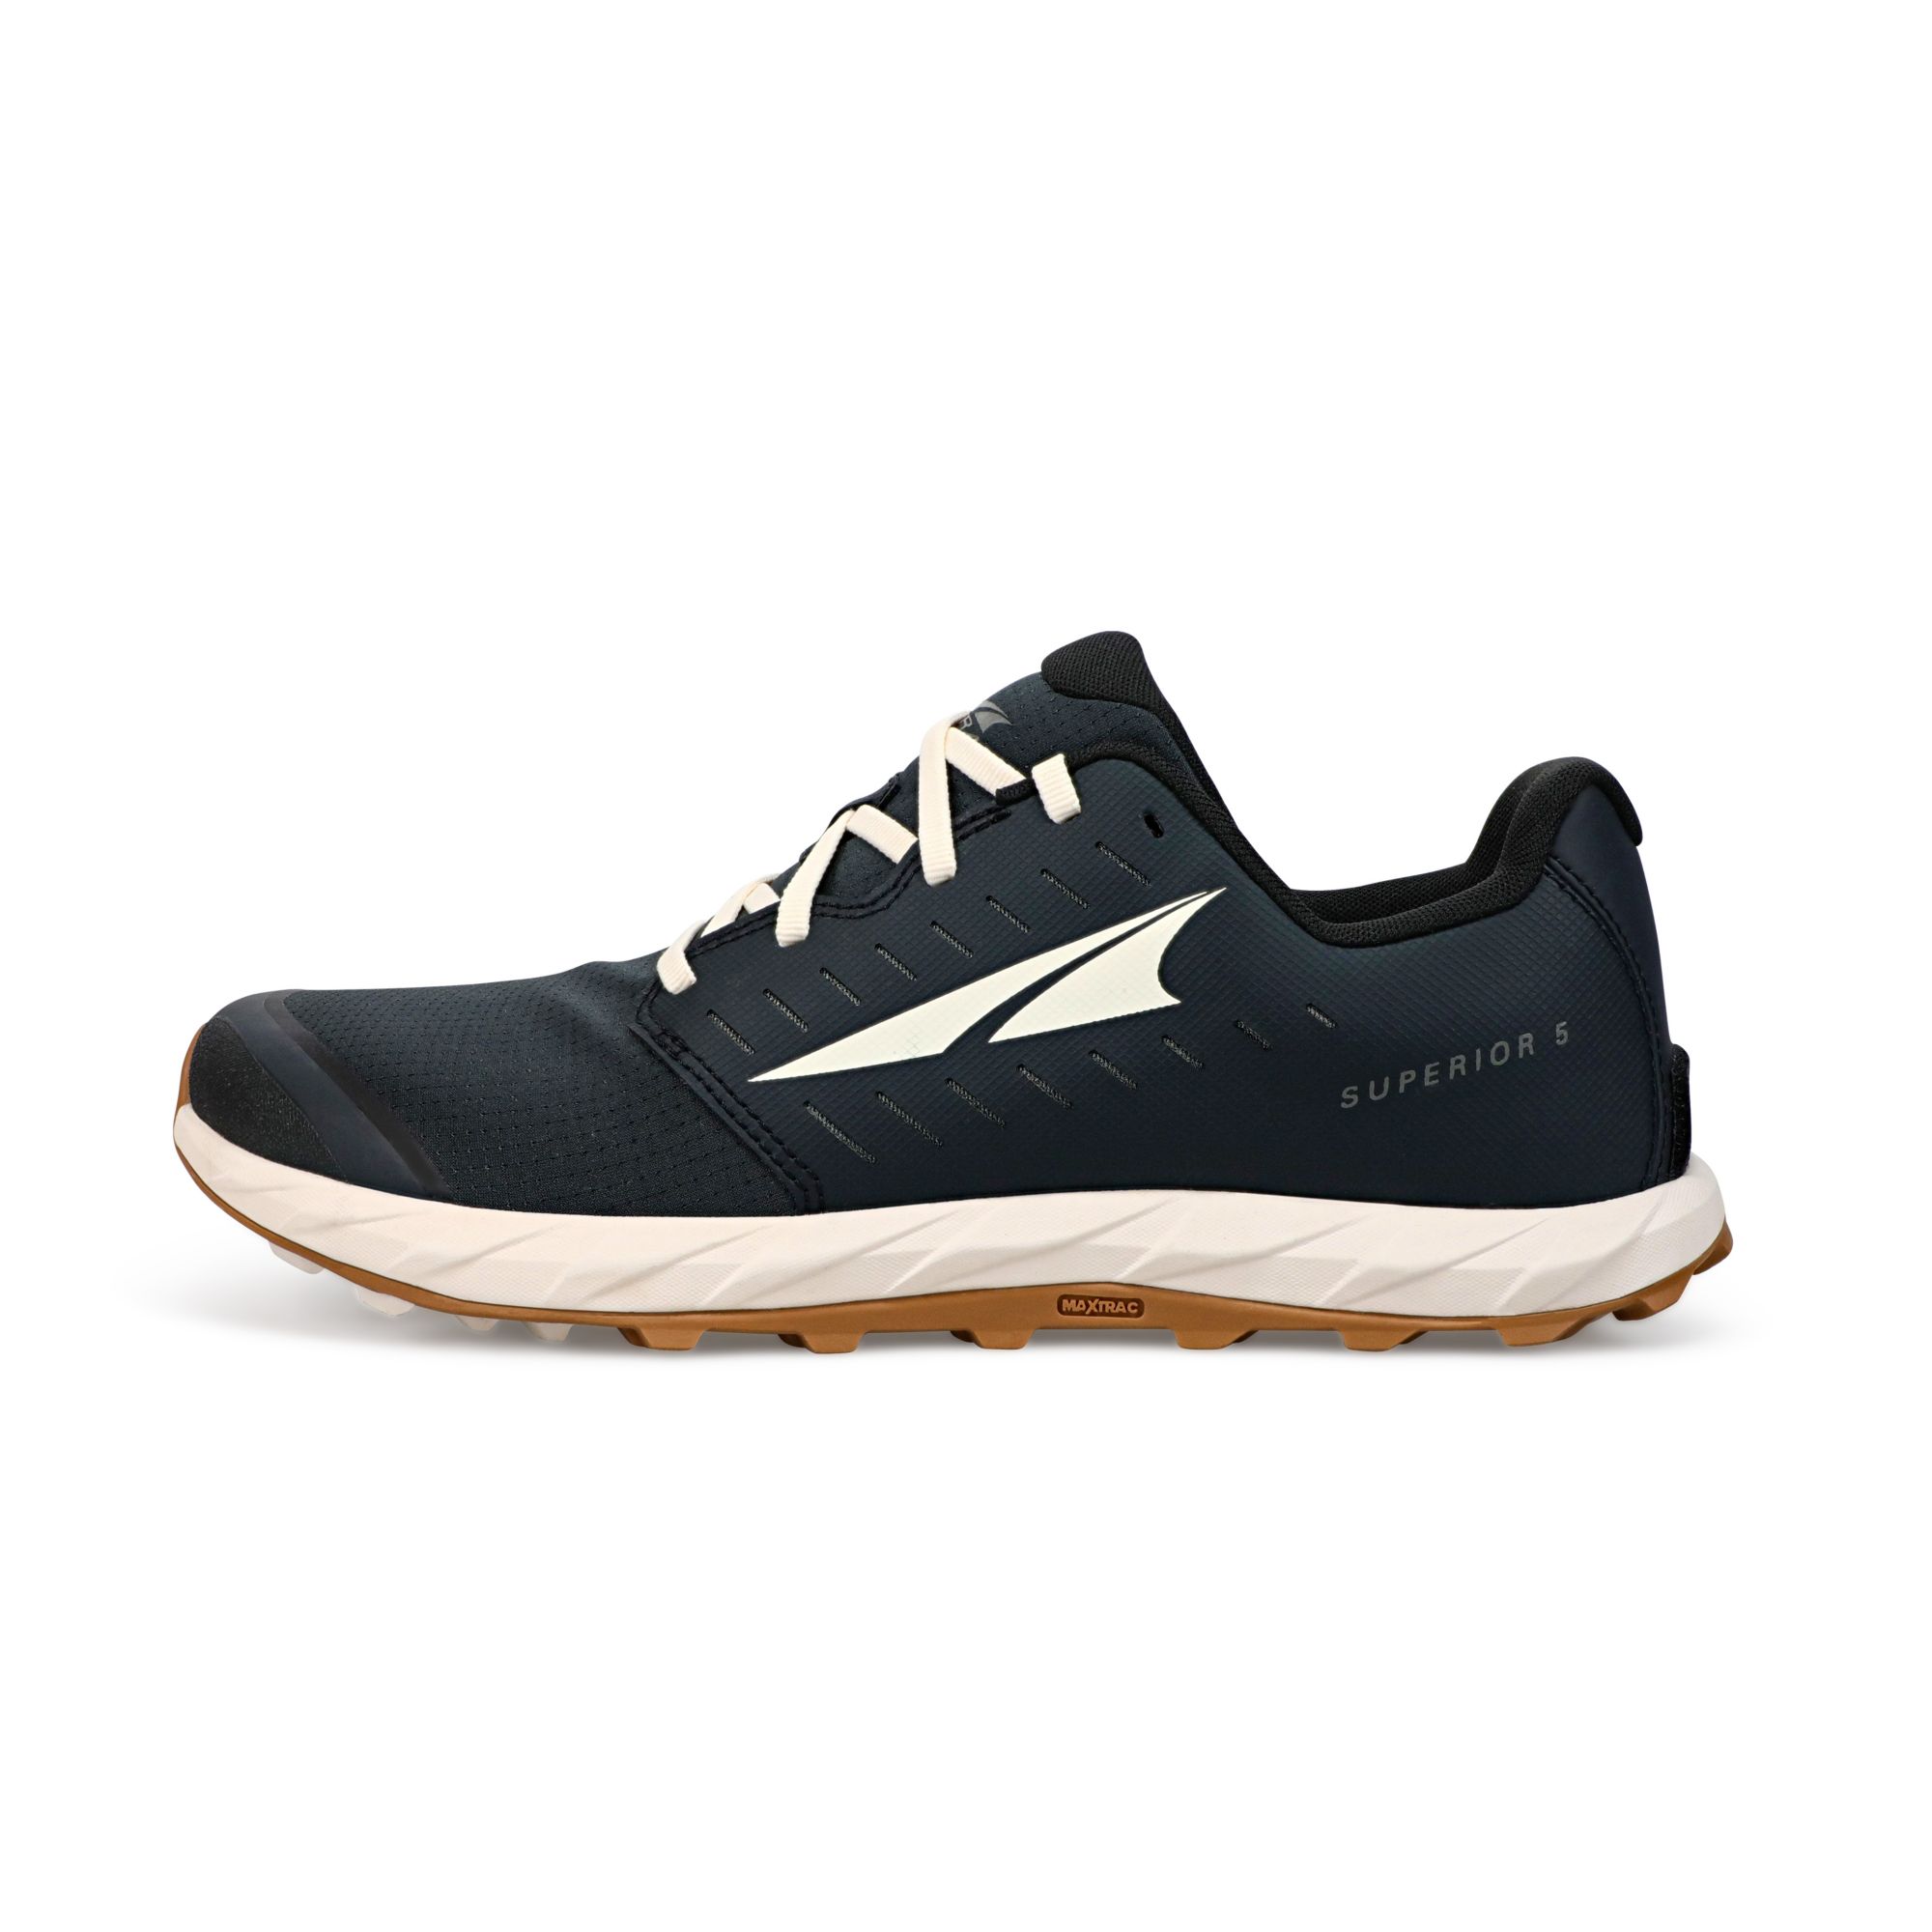 ALTRA Men's AL0A546Z Superior 5 Trail Running Shoe 